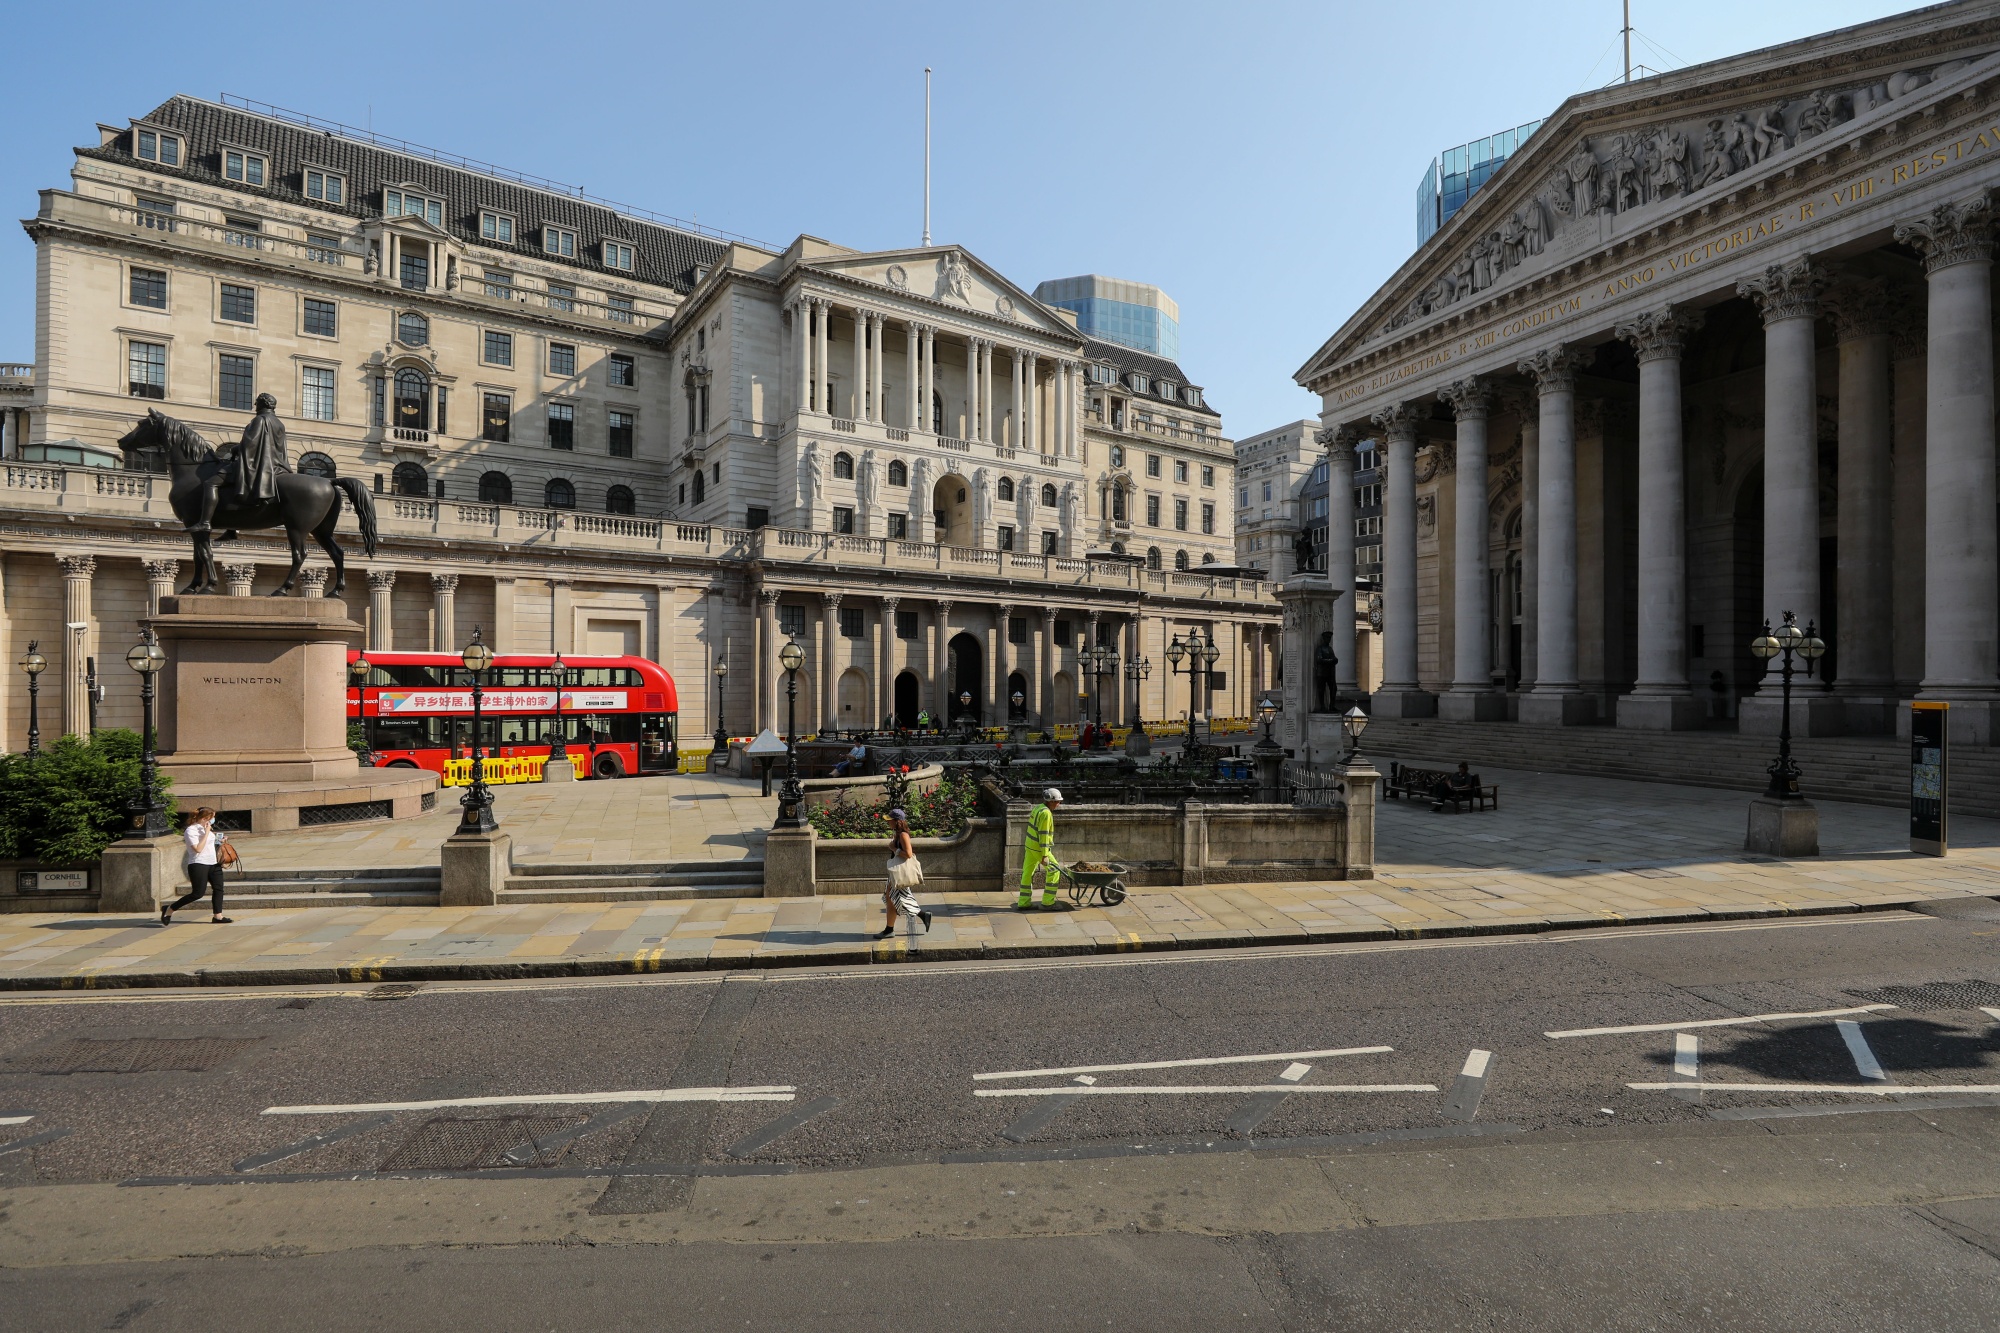 Bank of England Debating Digital Currency Creation, Bailey Says - Bloomberg